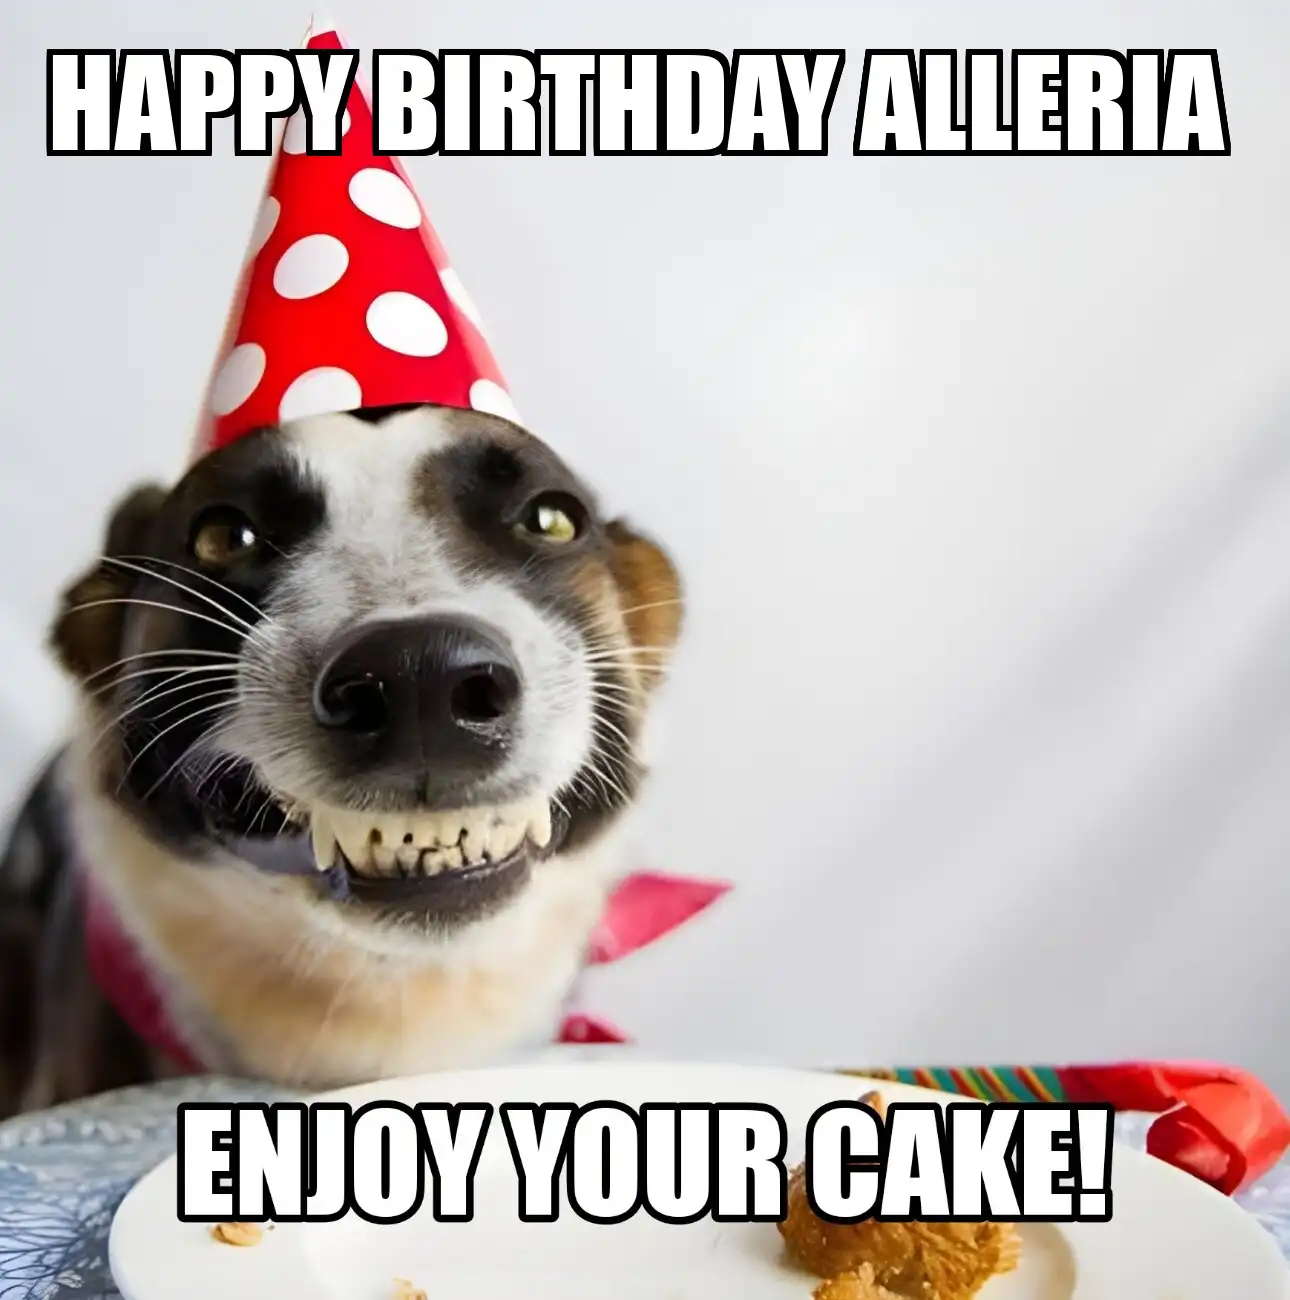 Happy Birthday Alleria Enjoy Your Cake Dog Meme